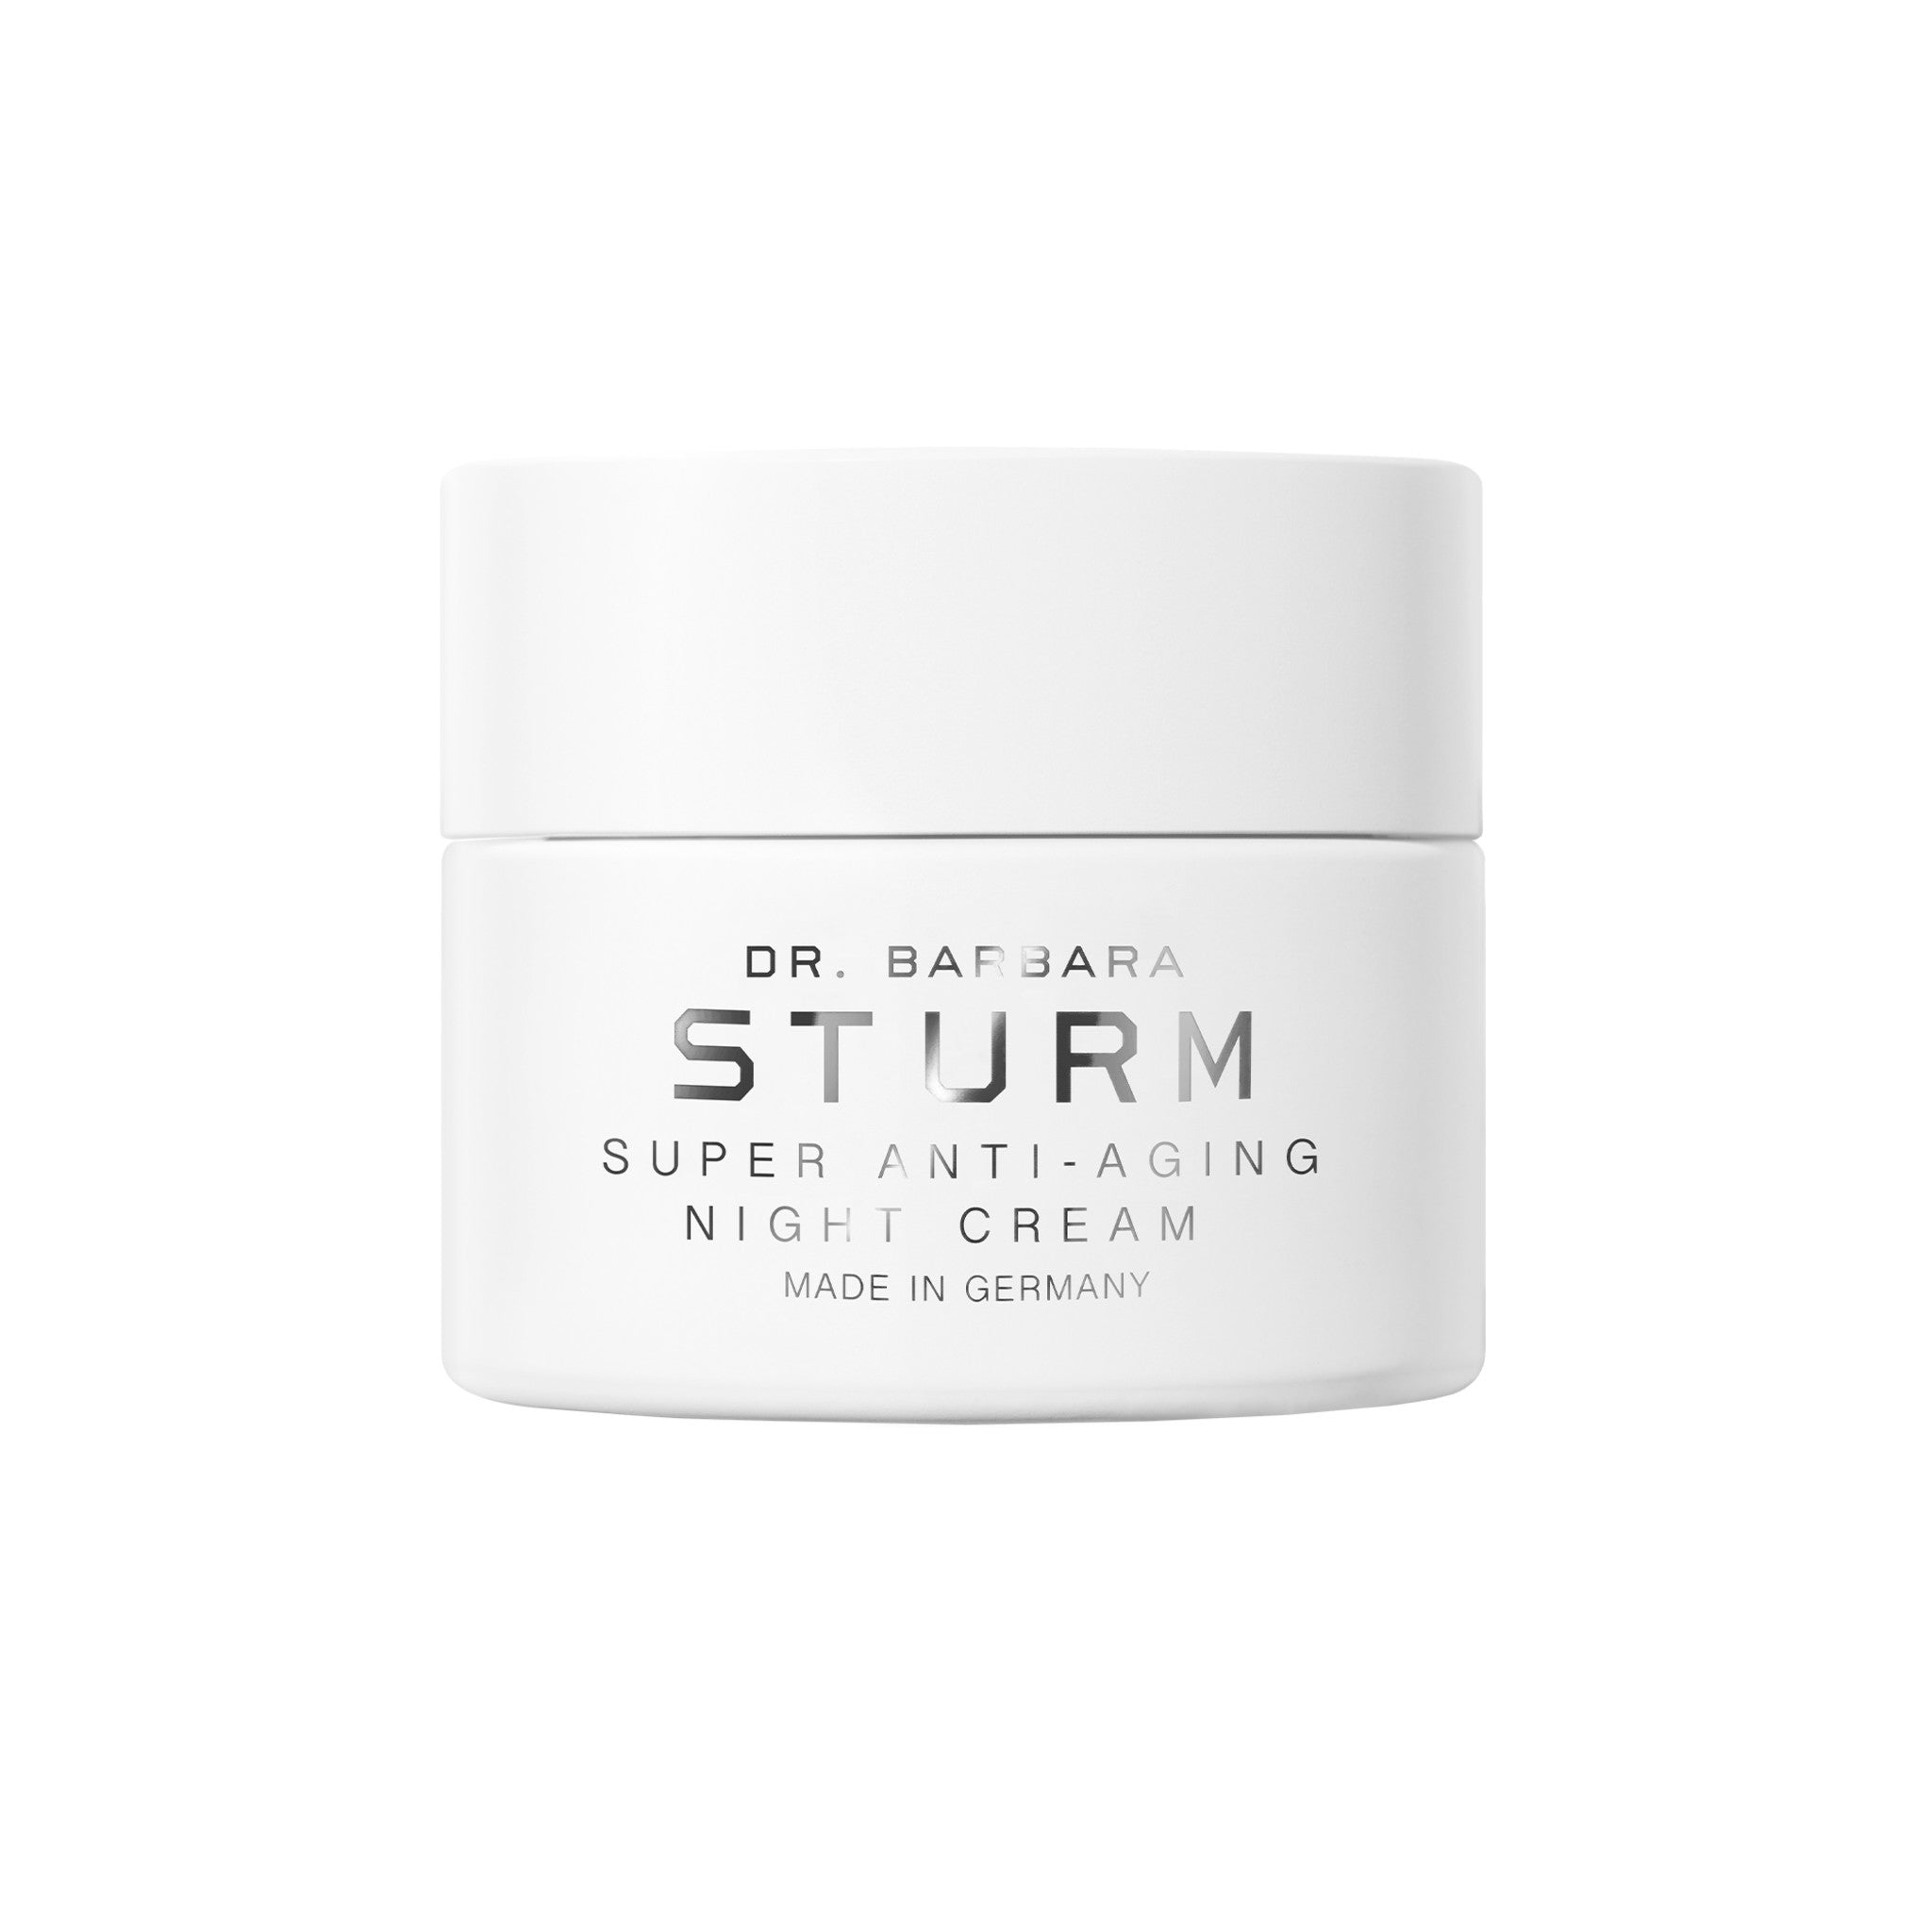 Dr. Barbara Sturm Super Anti-Aging Night Cream main image.